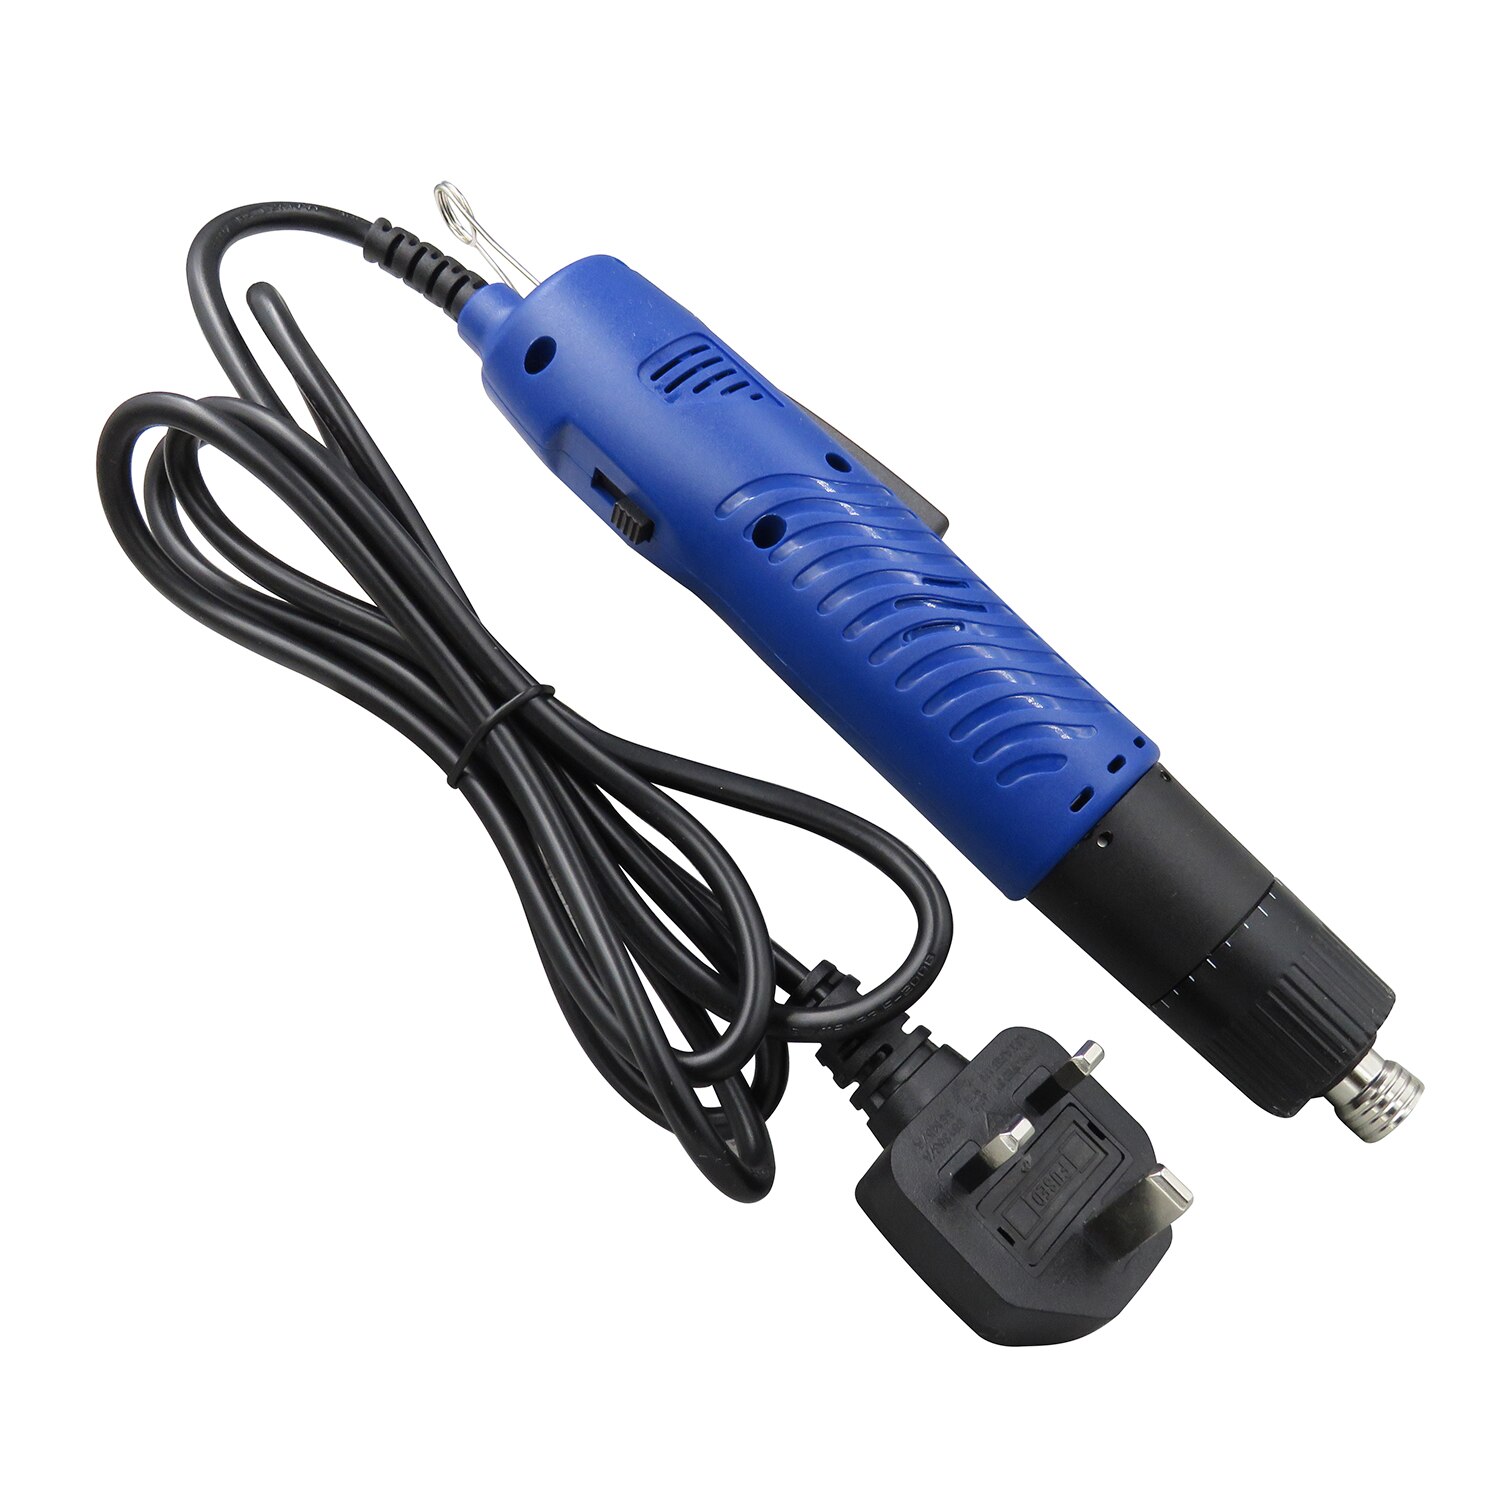 AC 220V Electric Screwdriver Handheld Corded Electric Screw Driver Adjustable Torque 1/4-in Screw Bit Diameter Repair Tool